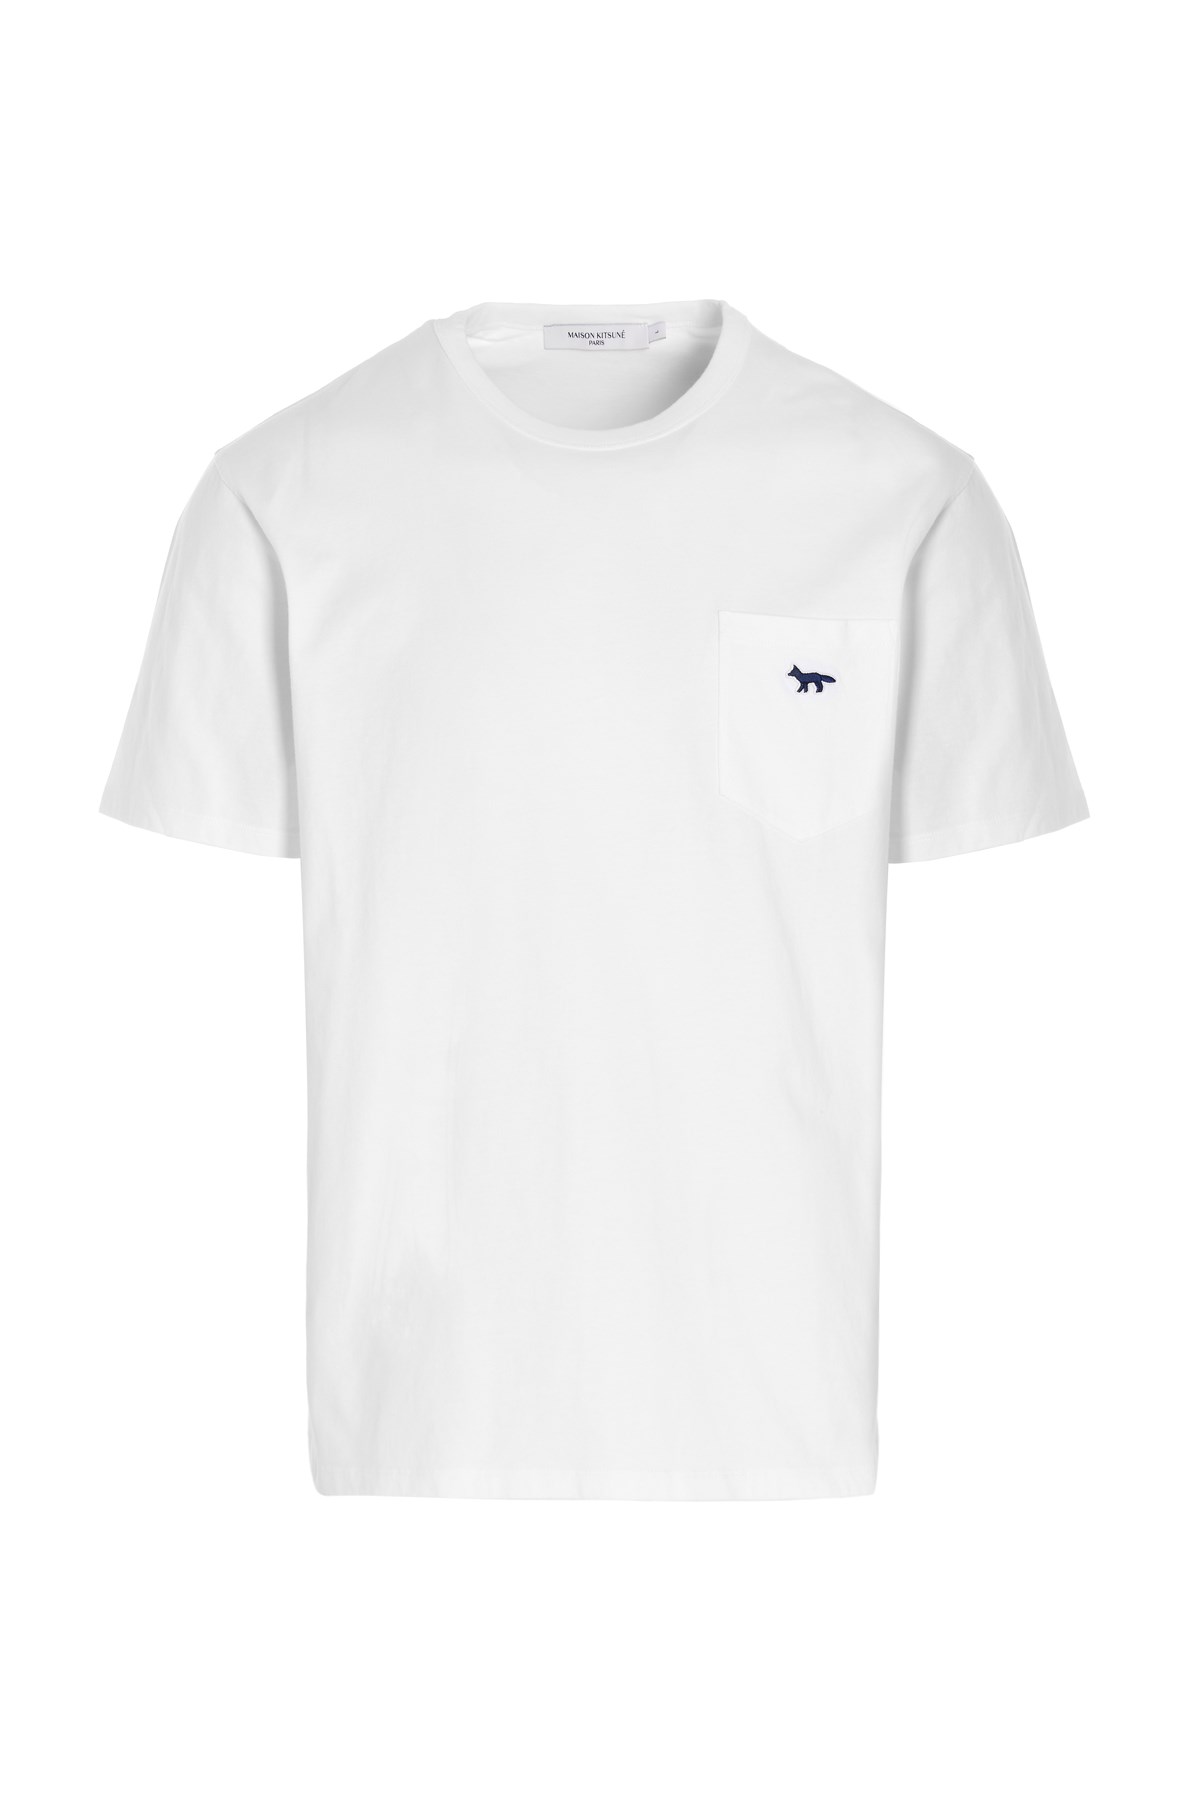 MAISON KITSUNE’ 'Navy Fox' T-Shirt